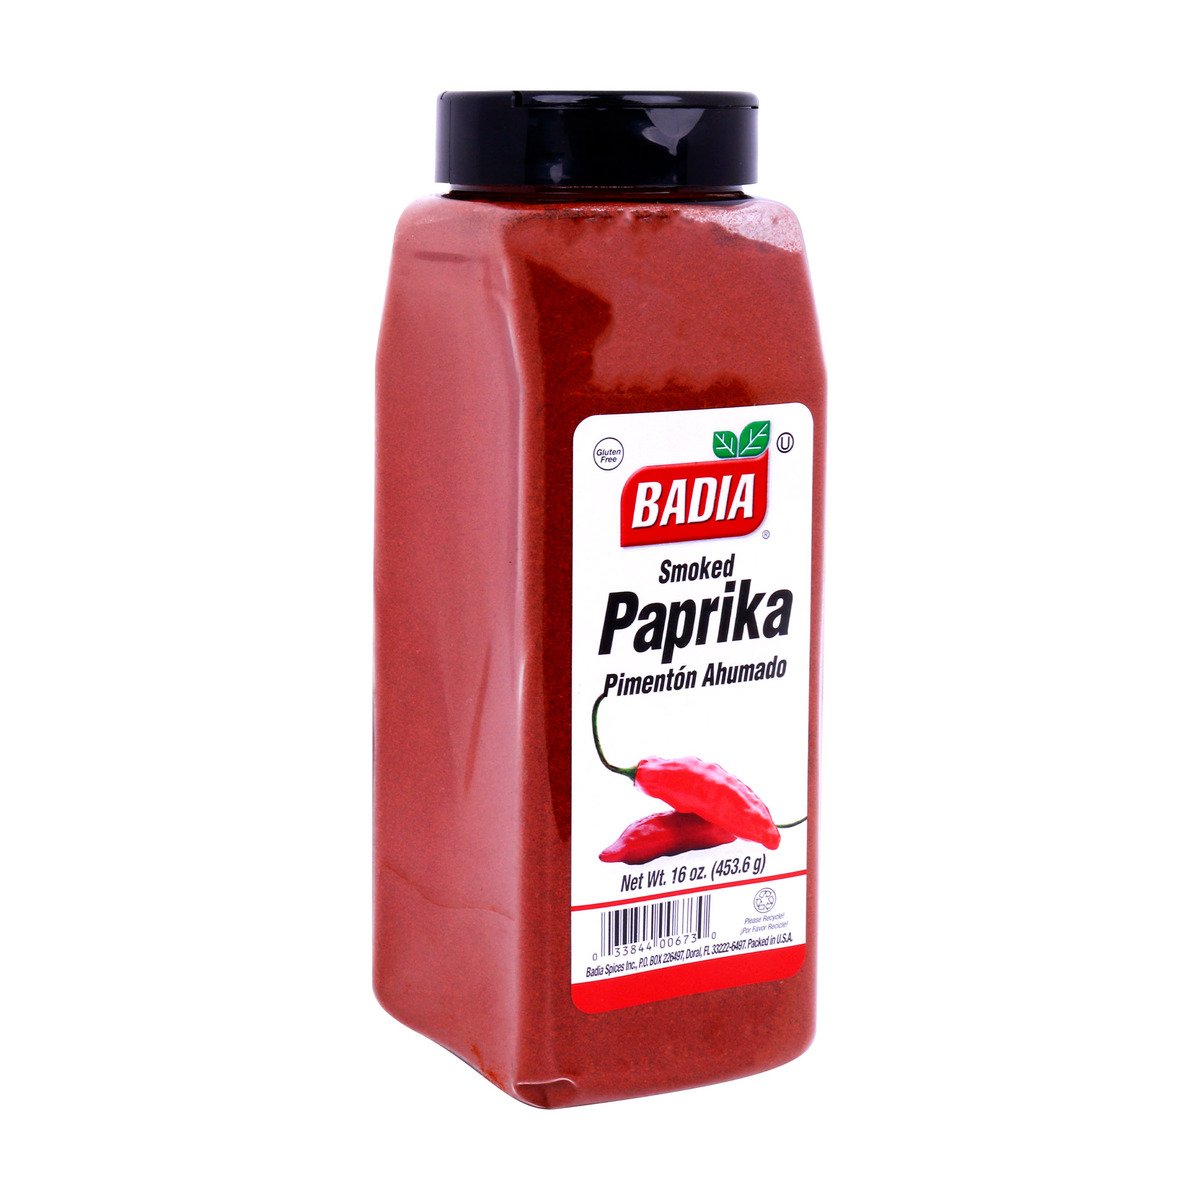 Badia Smoked Paprika 453.6 g